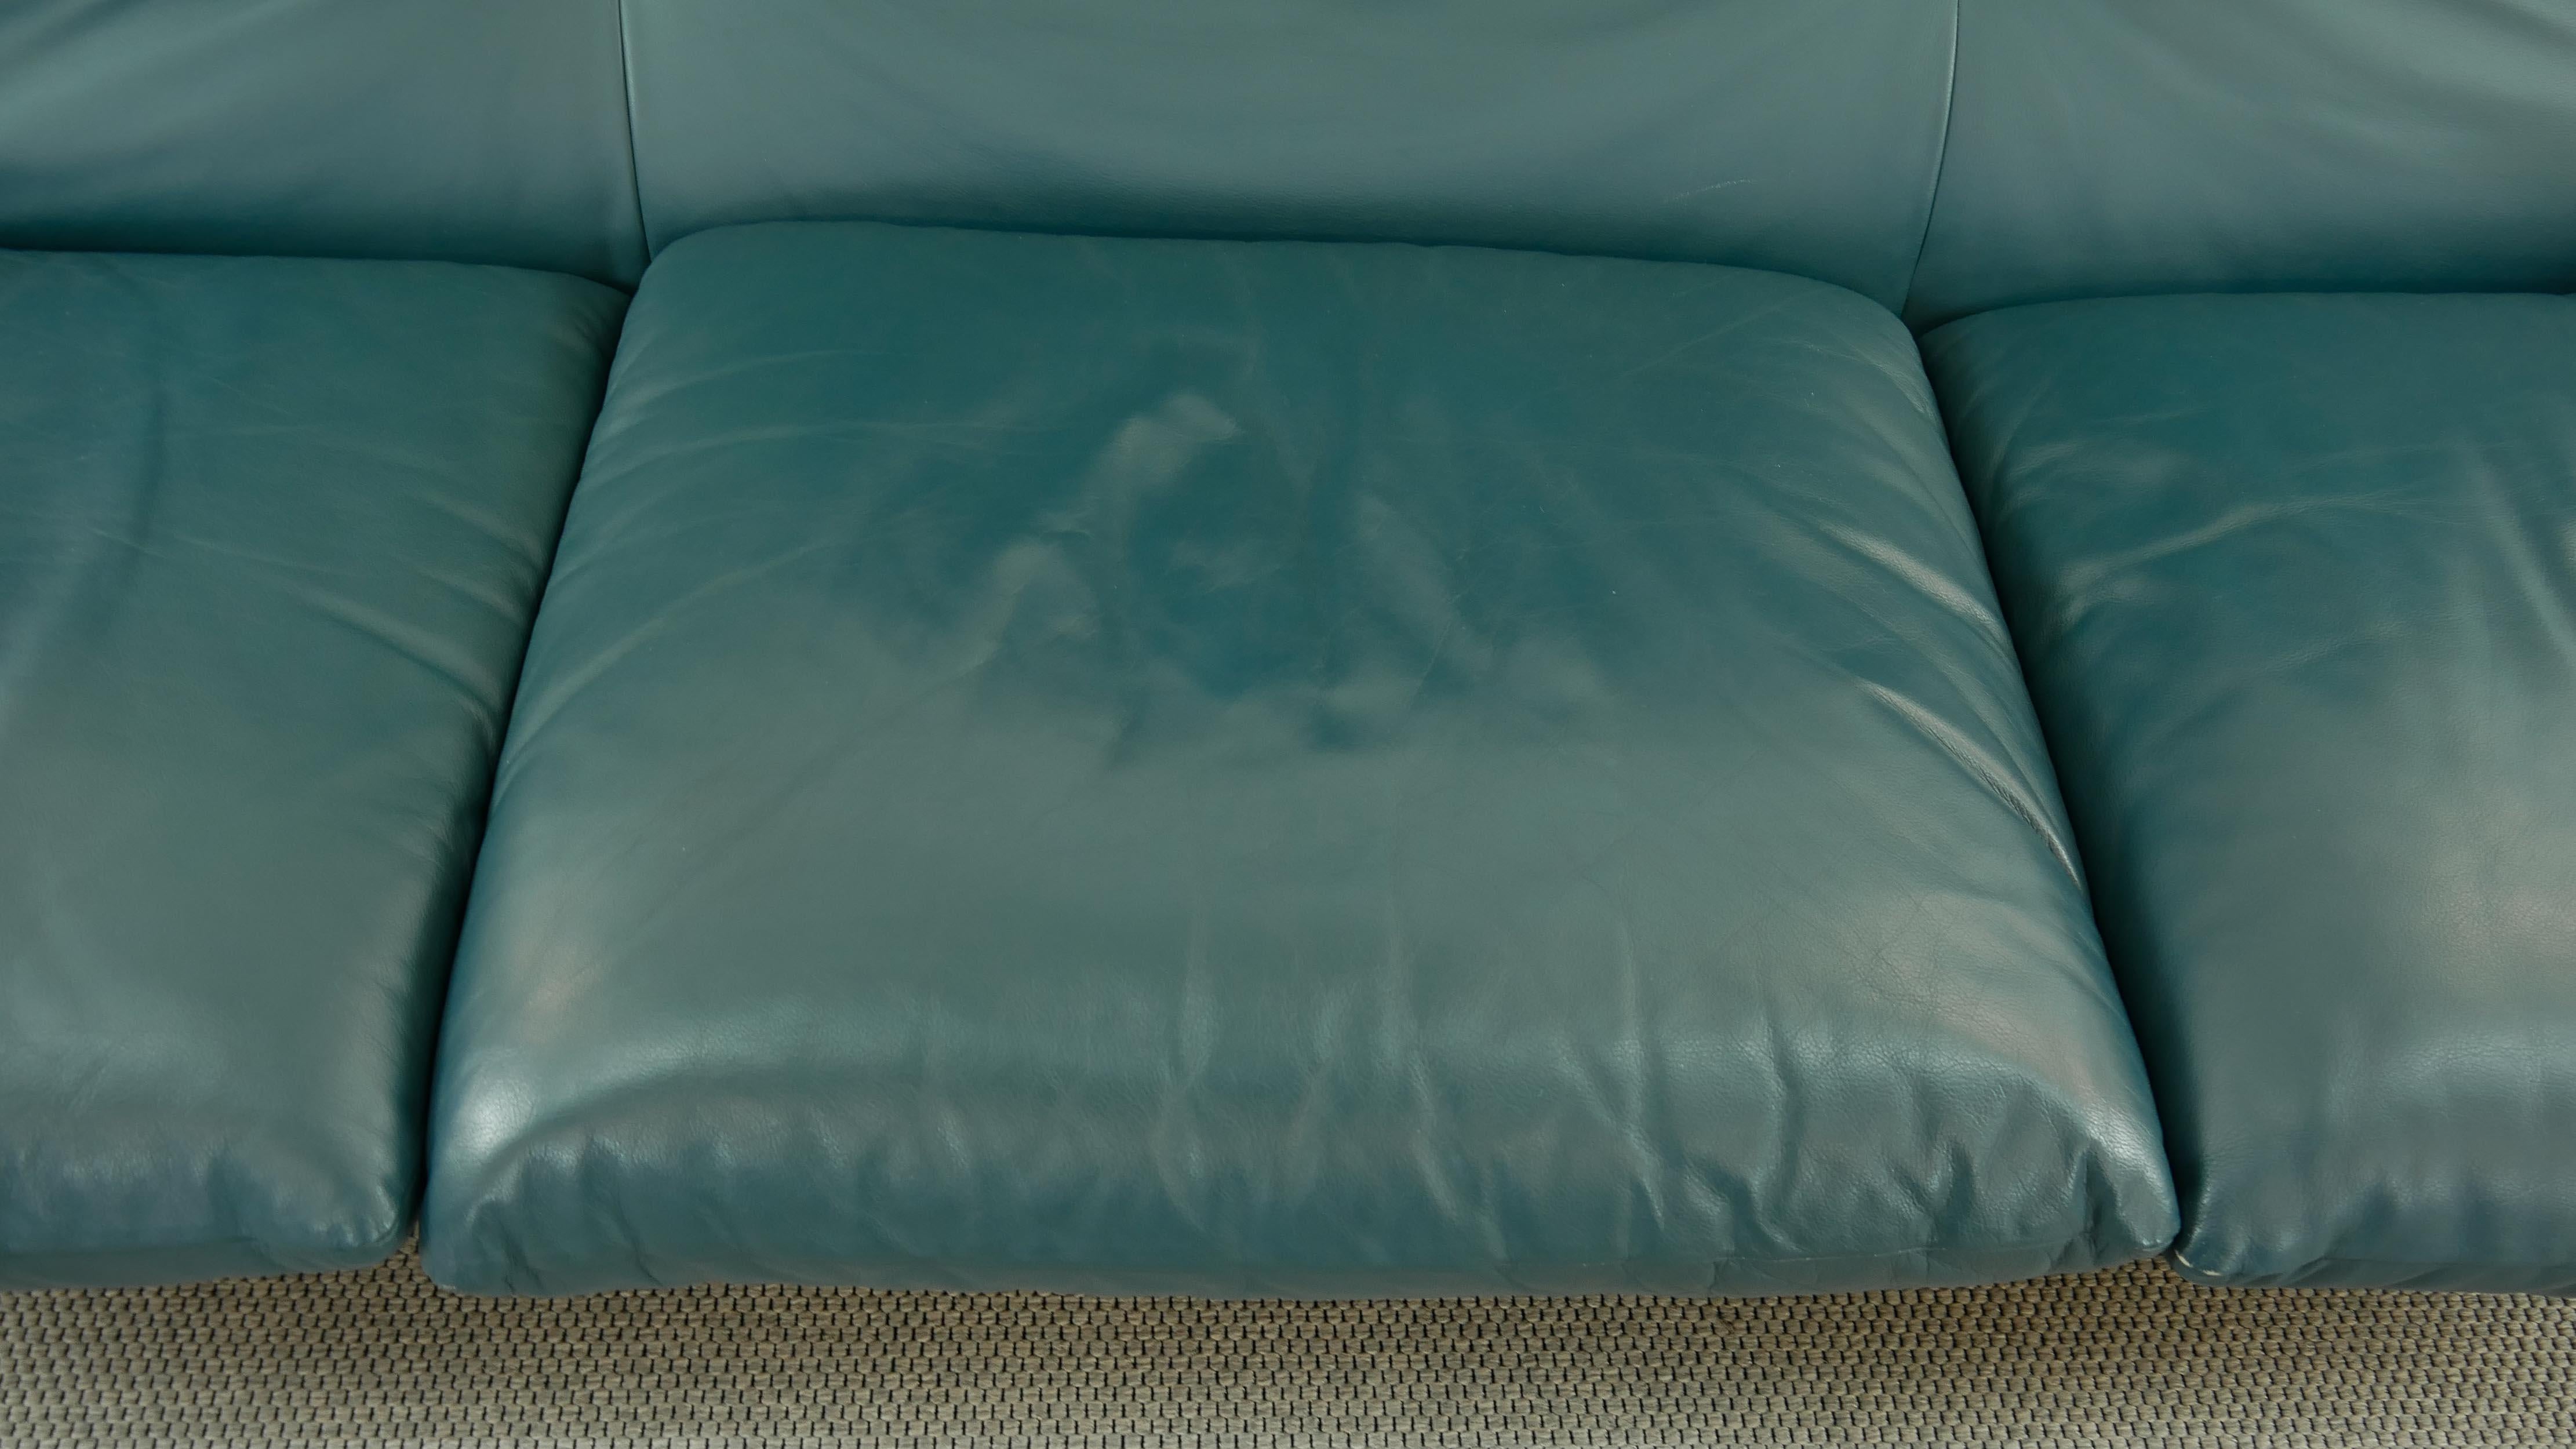 Cassina Maralunga 3-Seat Sofa by Vico Magistretti in Petrol-Darkgreen Leather 5